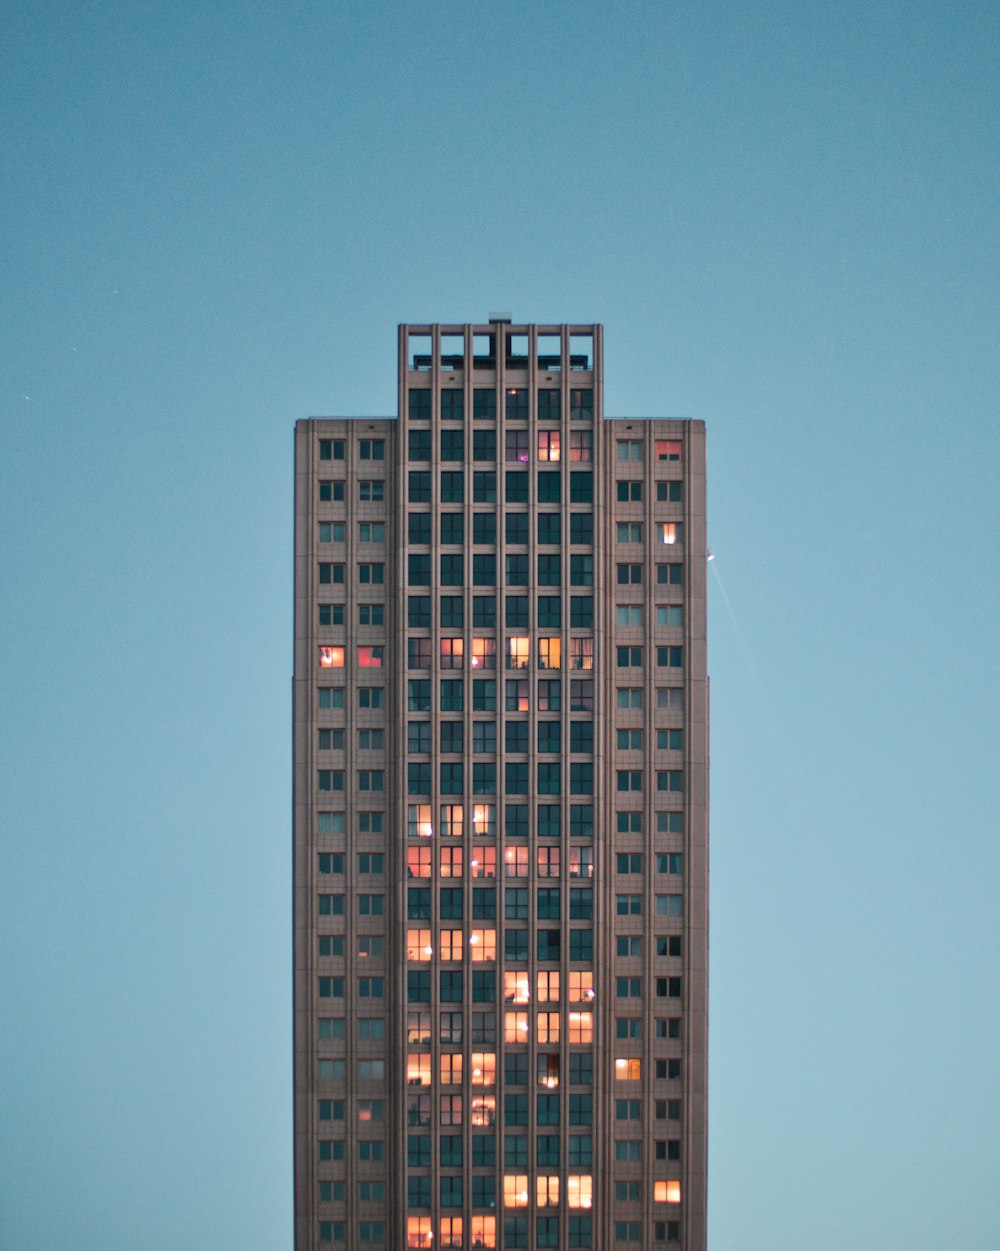 gray concrete high-rise building